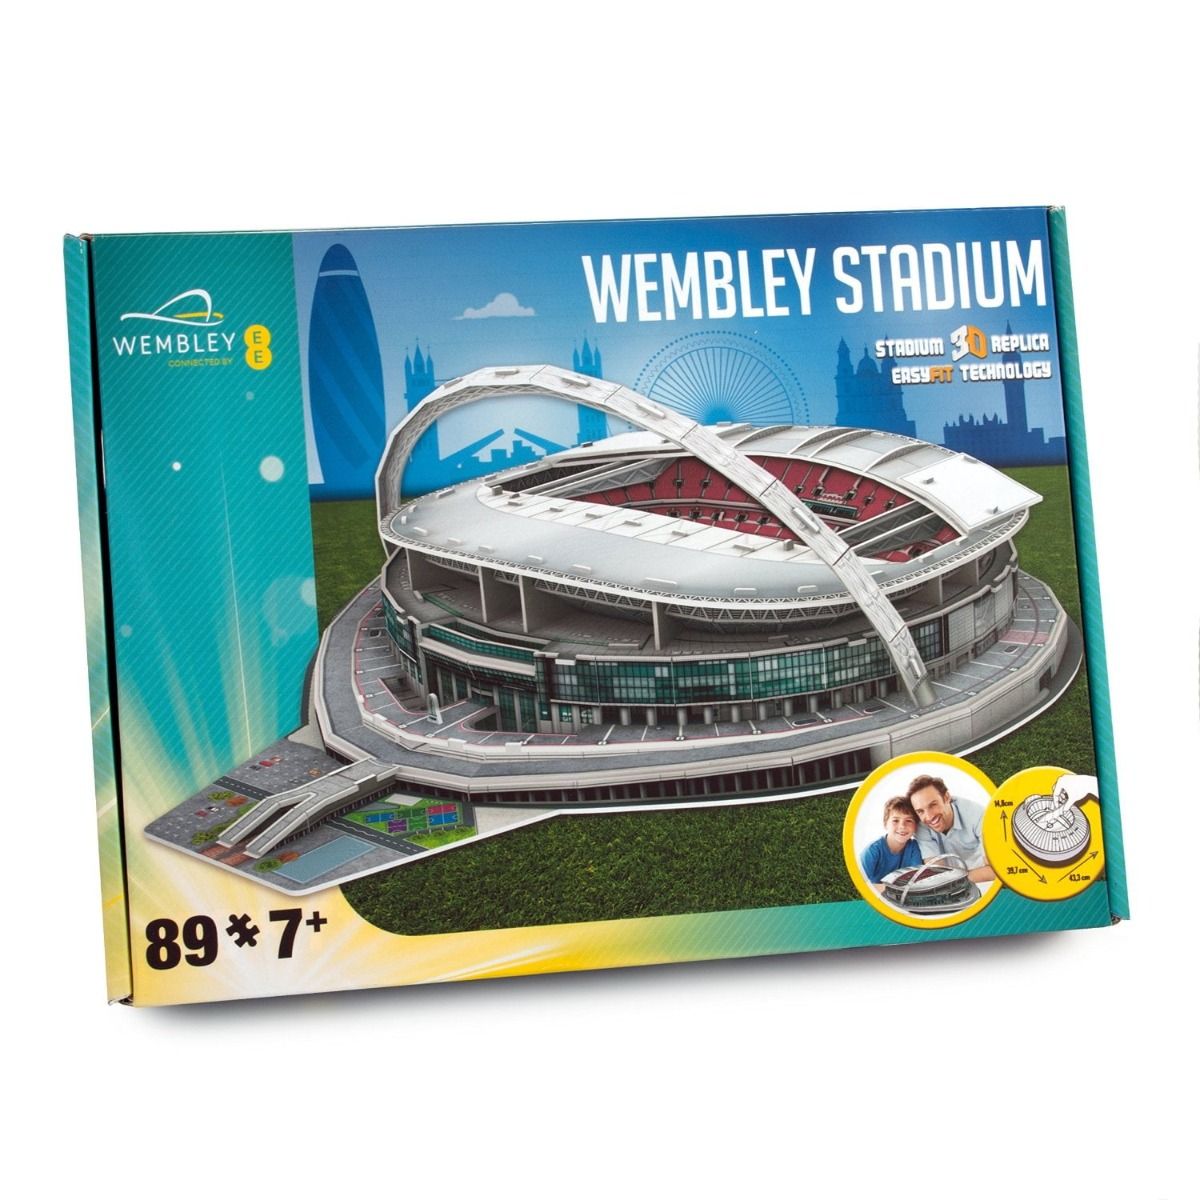  3D Replica Wembley Stadium England Football Club Easyfit Model